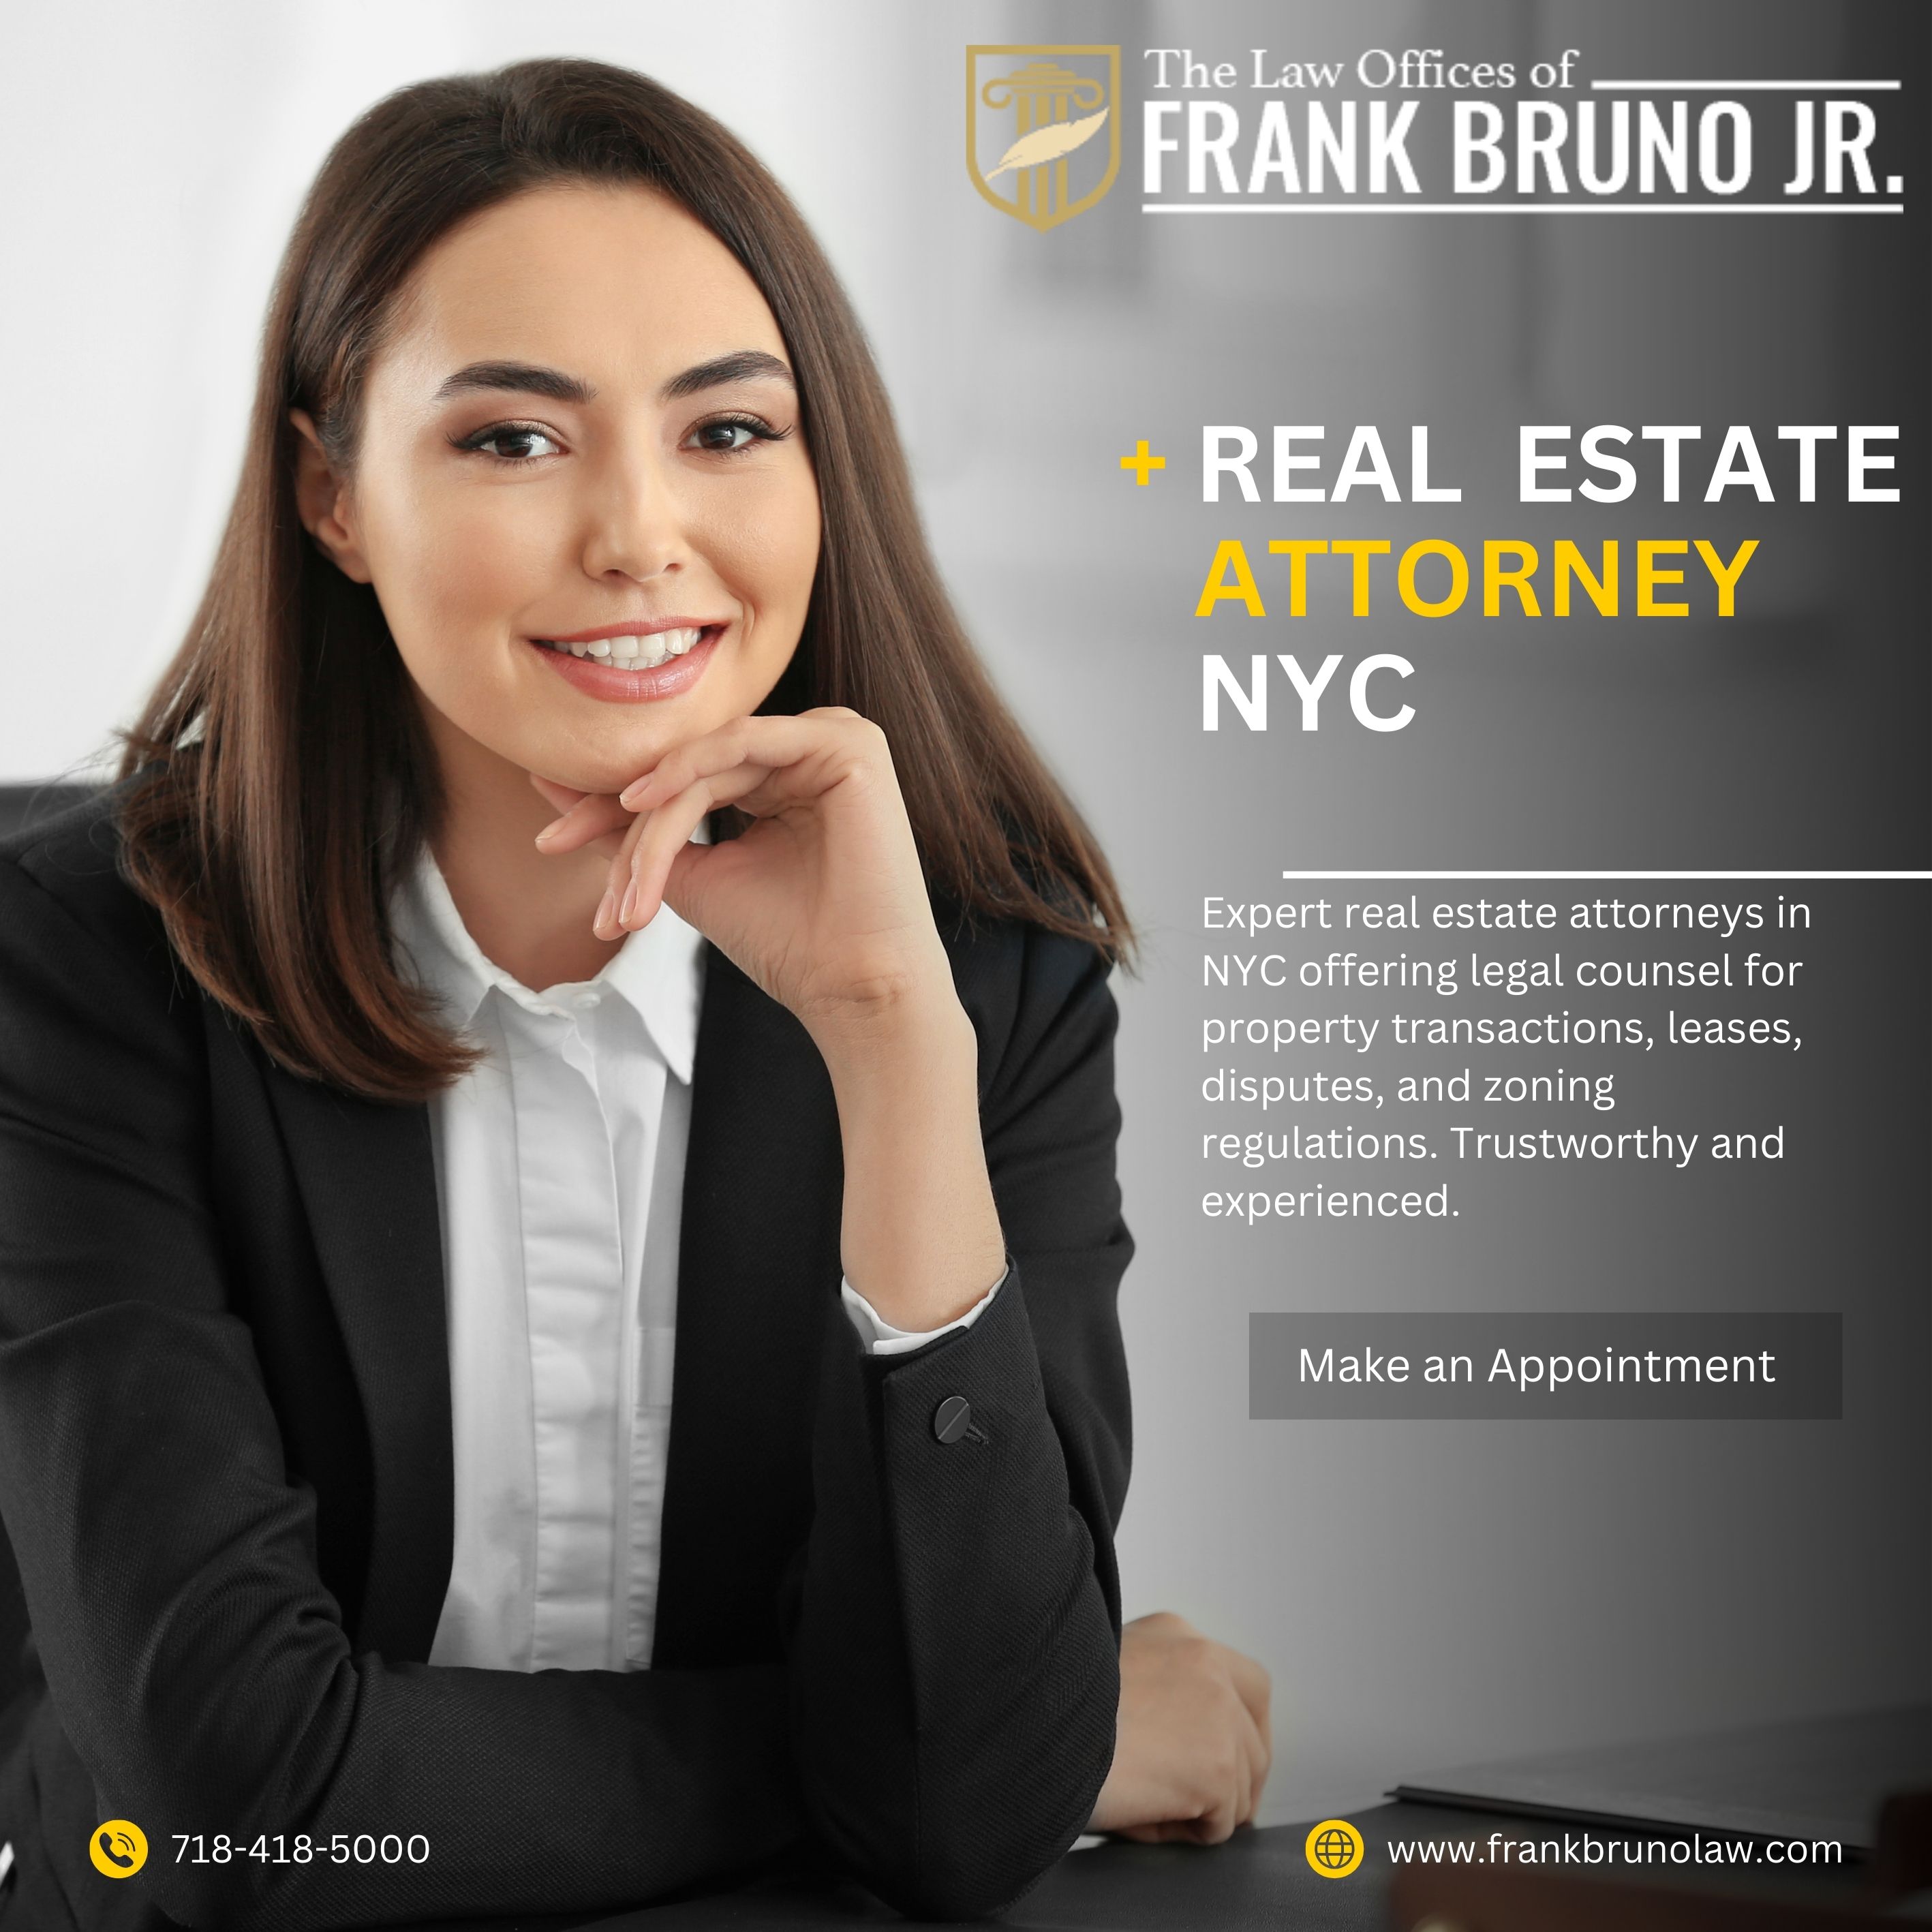 Real Estate Attorney NYC - New York - New York ID1553795 3